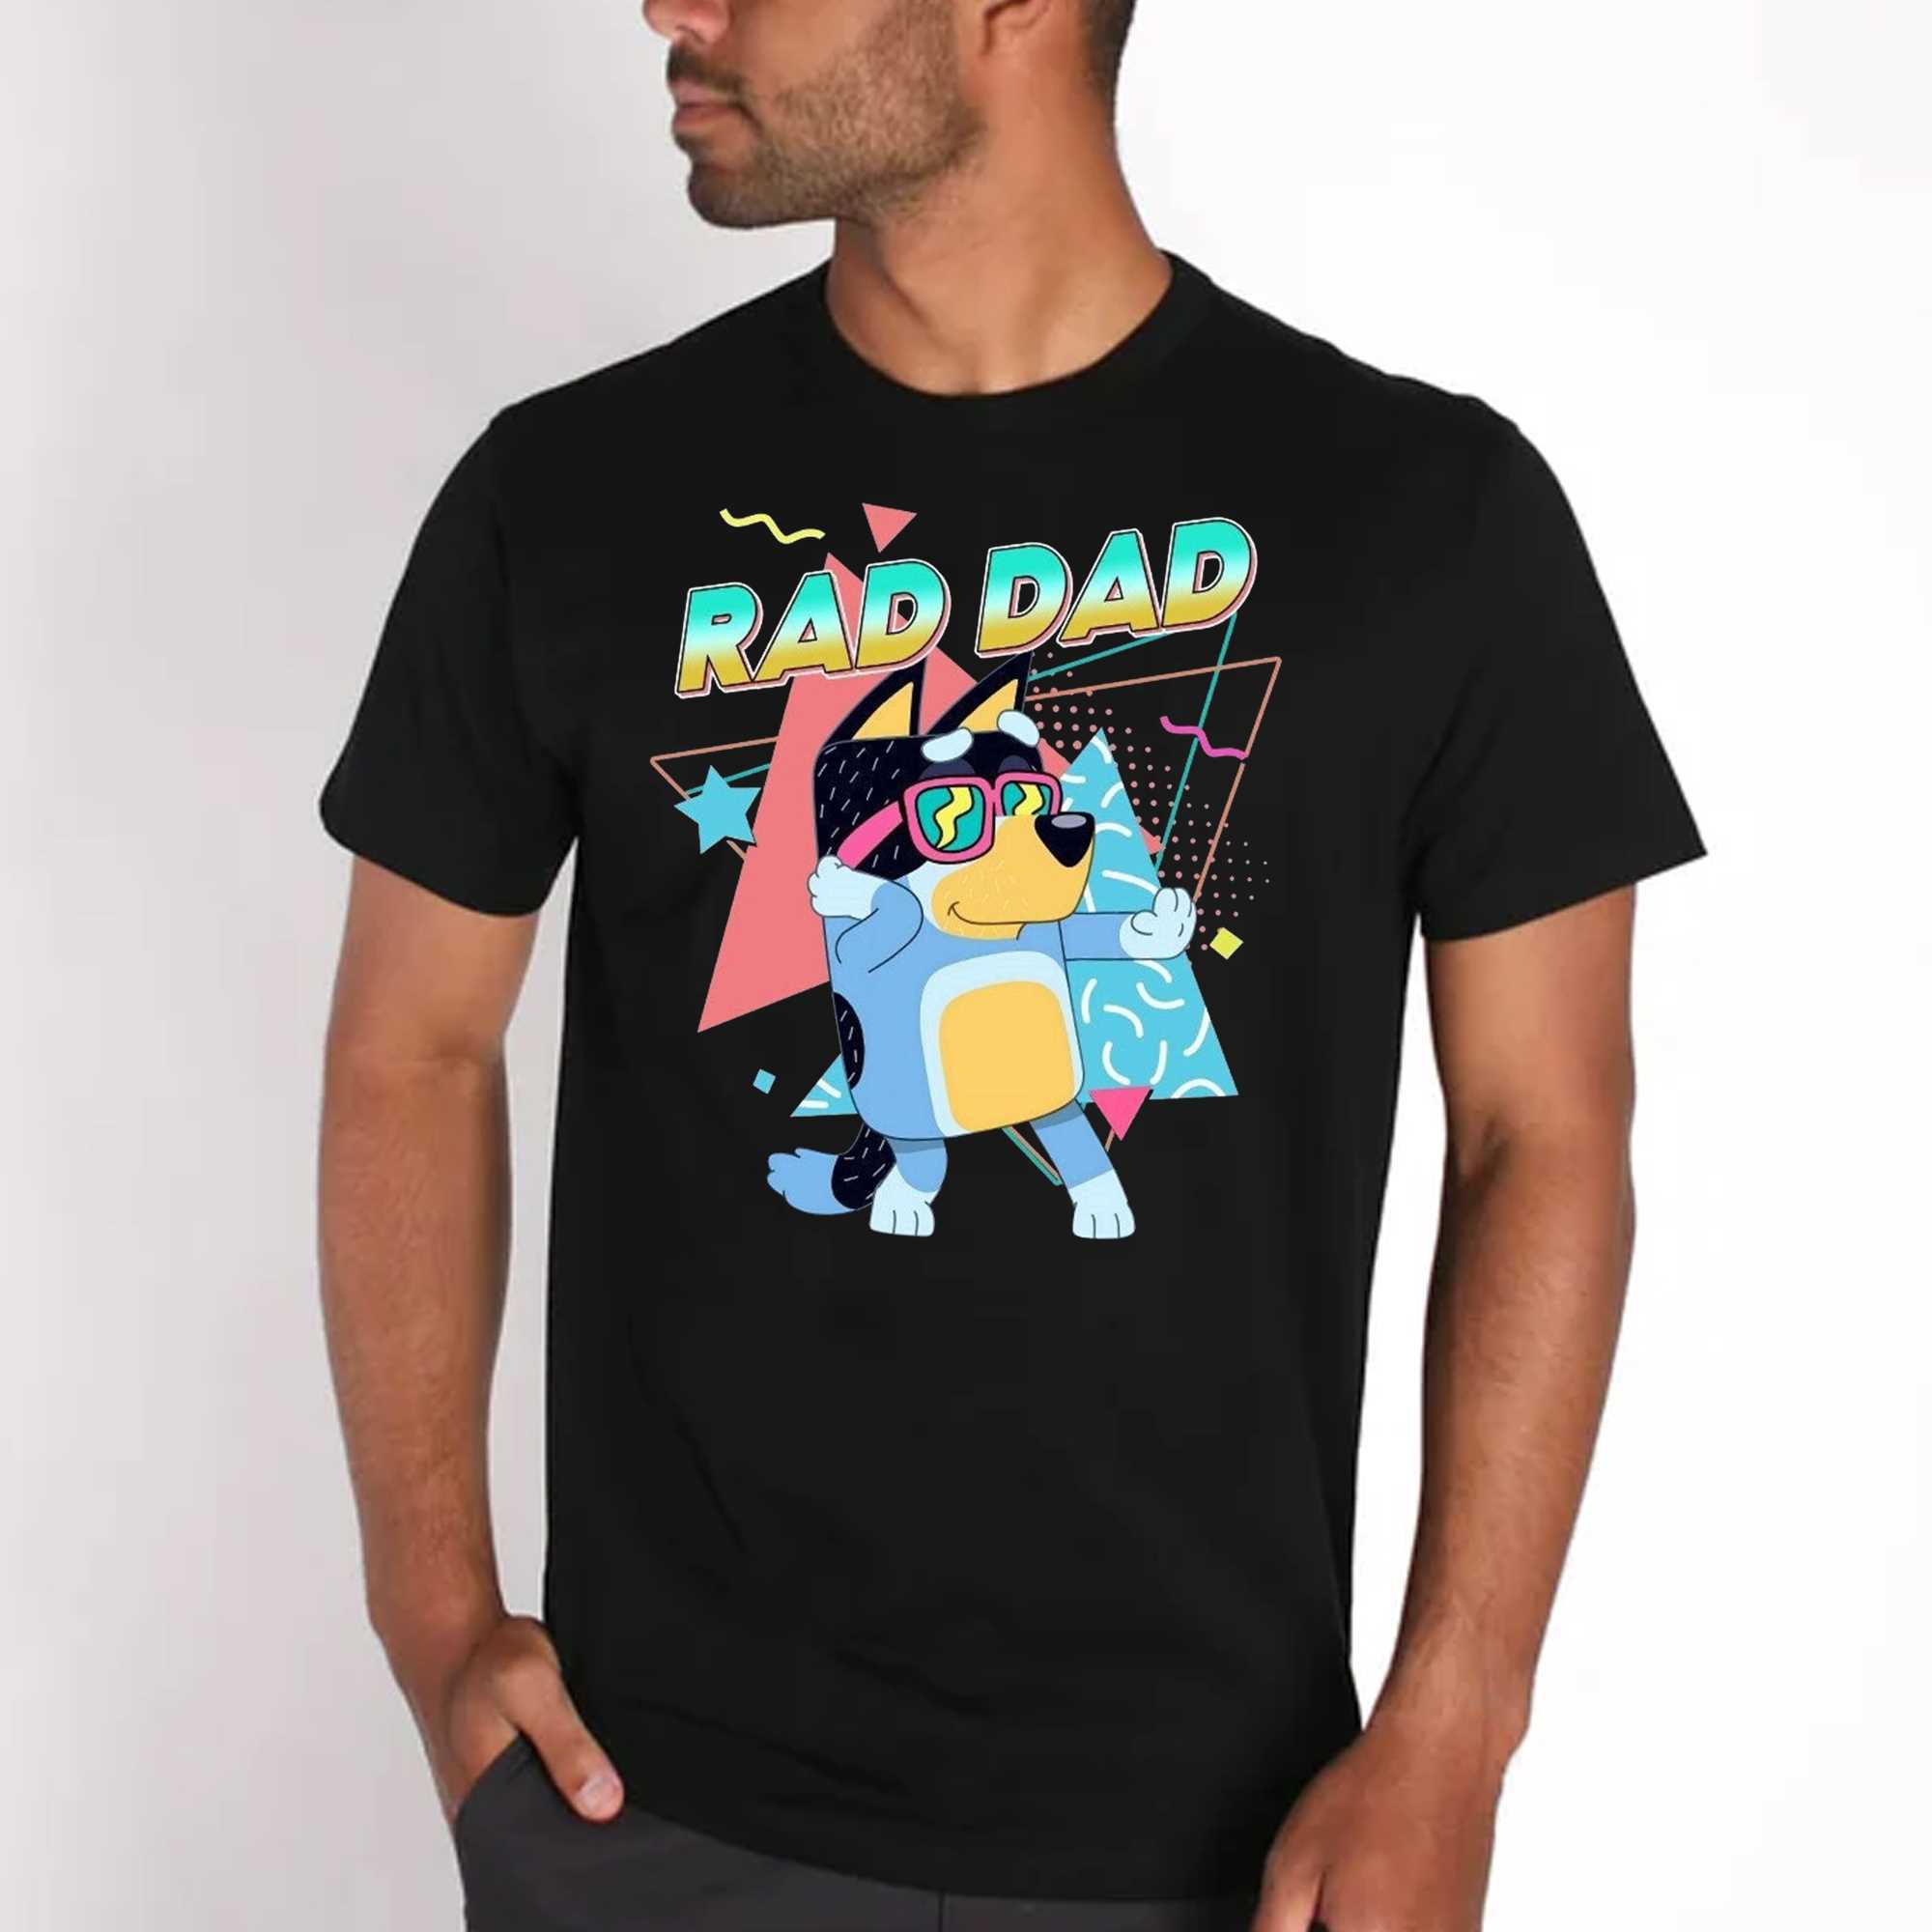 bluey rad dad t shirt gift for dad